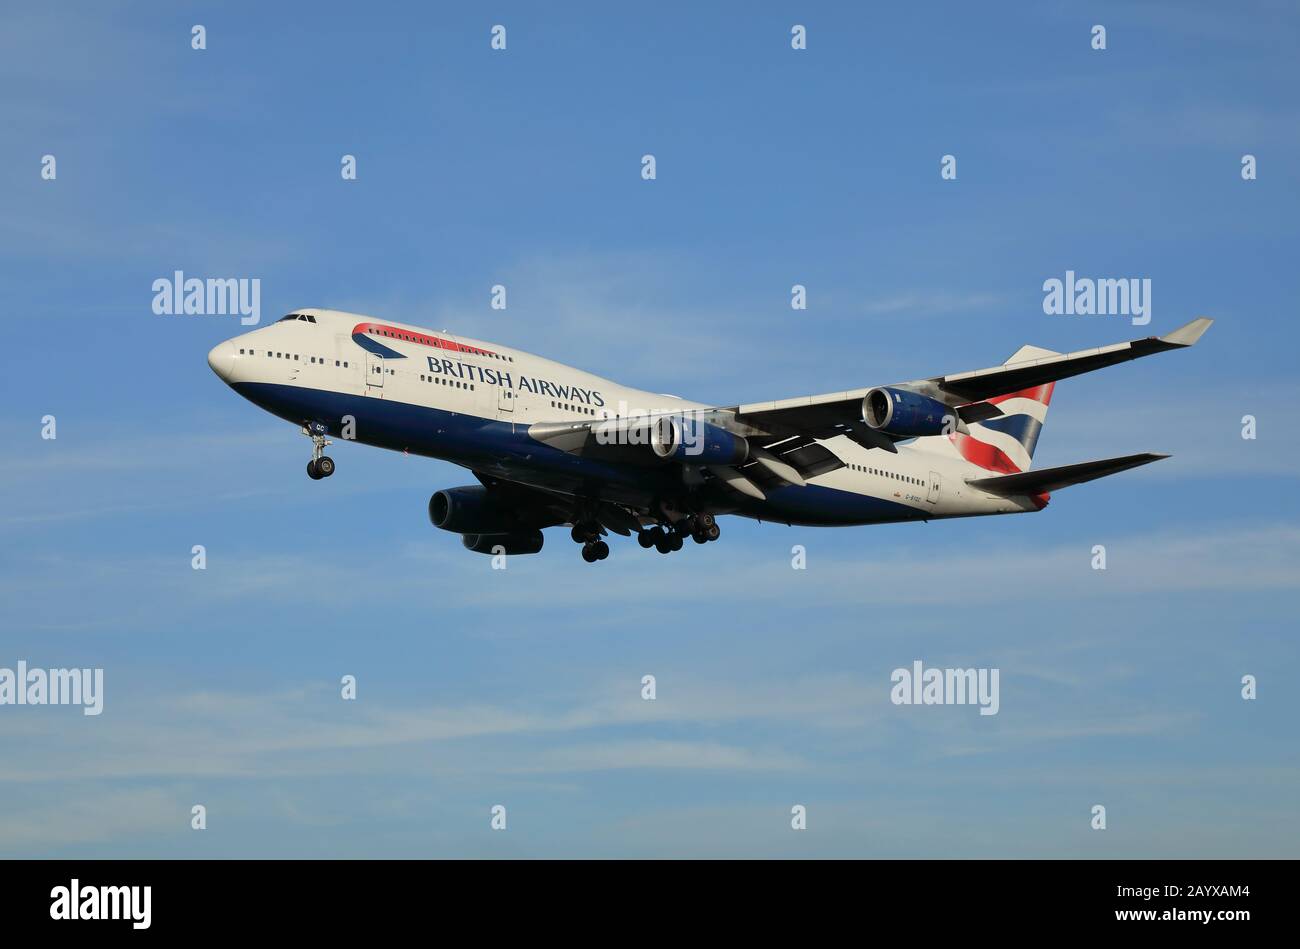 British Airways Boeing 747 jumbo jet passenger aircraft, registration number G-BYGC. Stock Photo